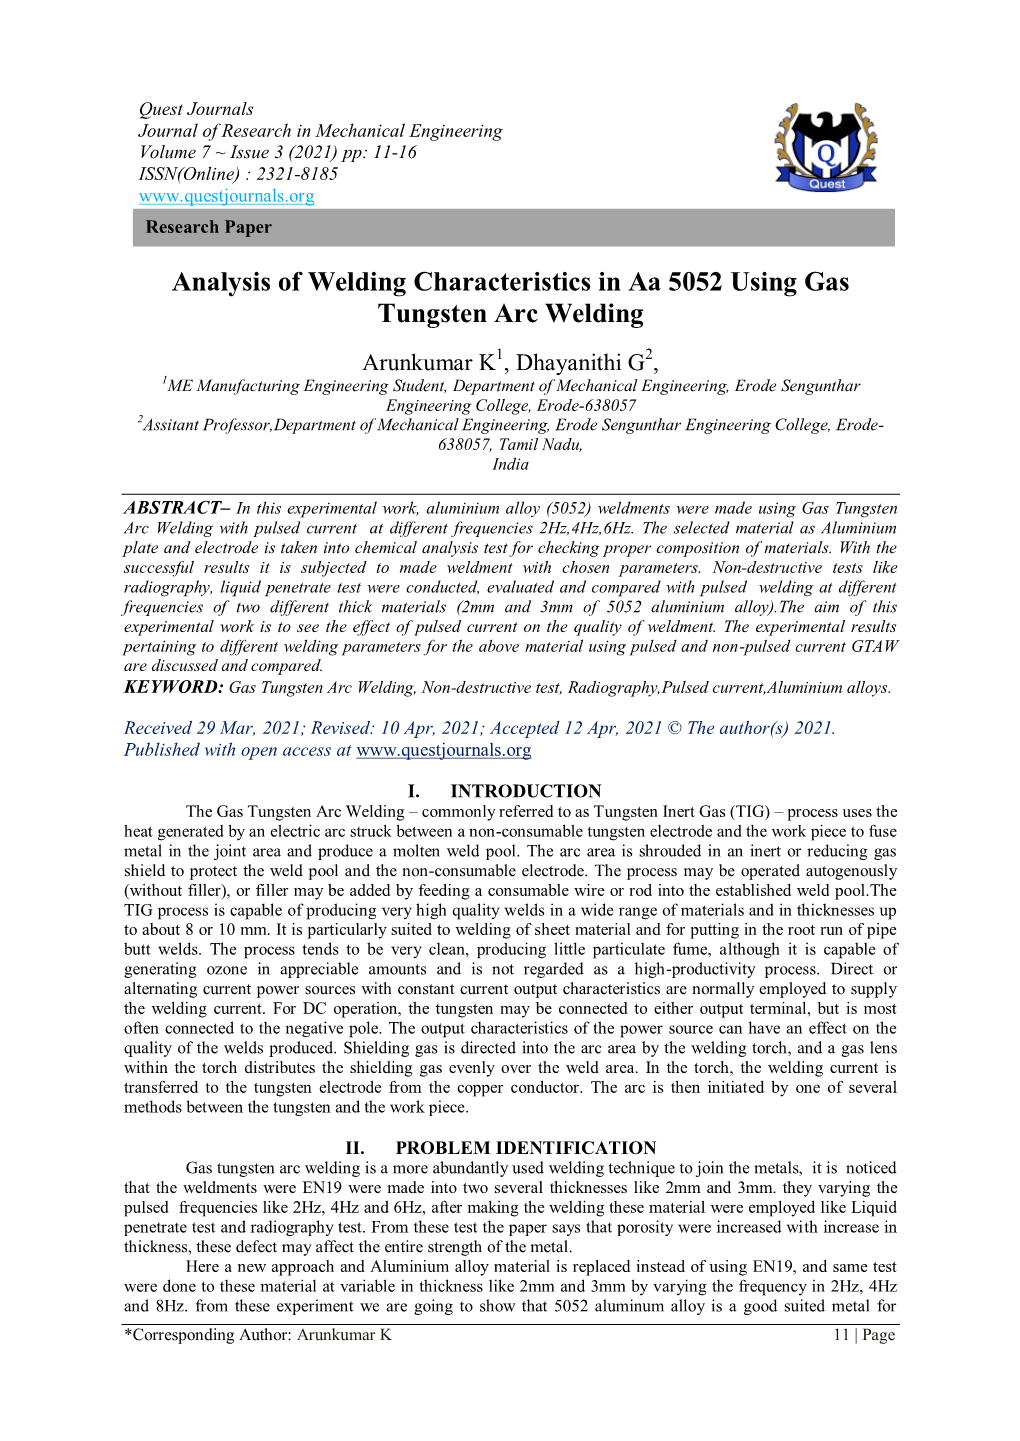 Analysis of Welding Characteristics in Aa 5052 Using Gas Tungsten Arc Welding